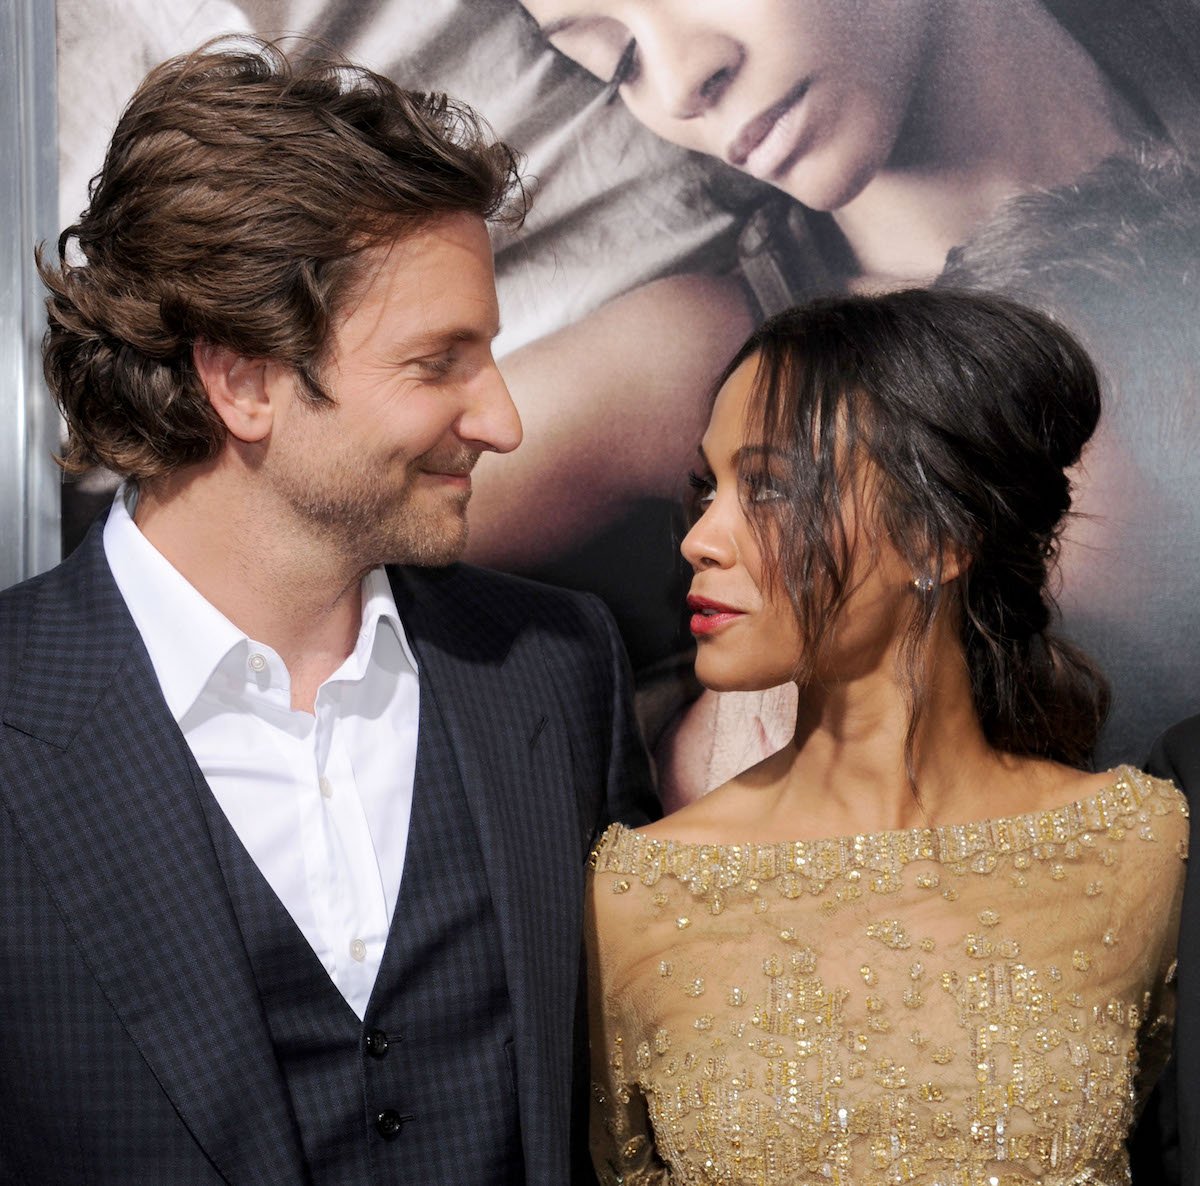 Actors Bradley Cooper and Zoe Saldana arrive at the premiere of "The Words" in 2012